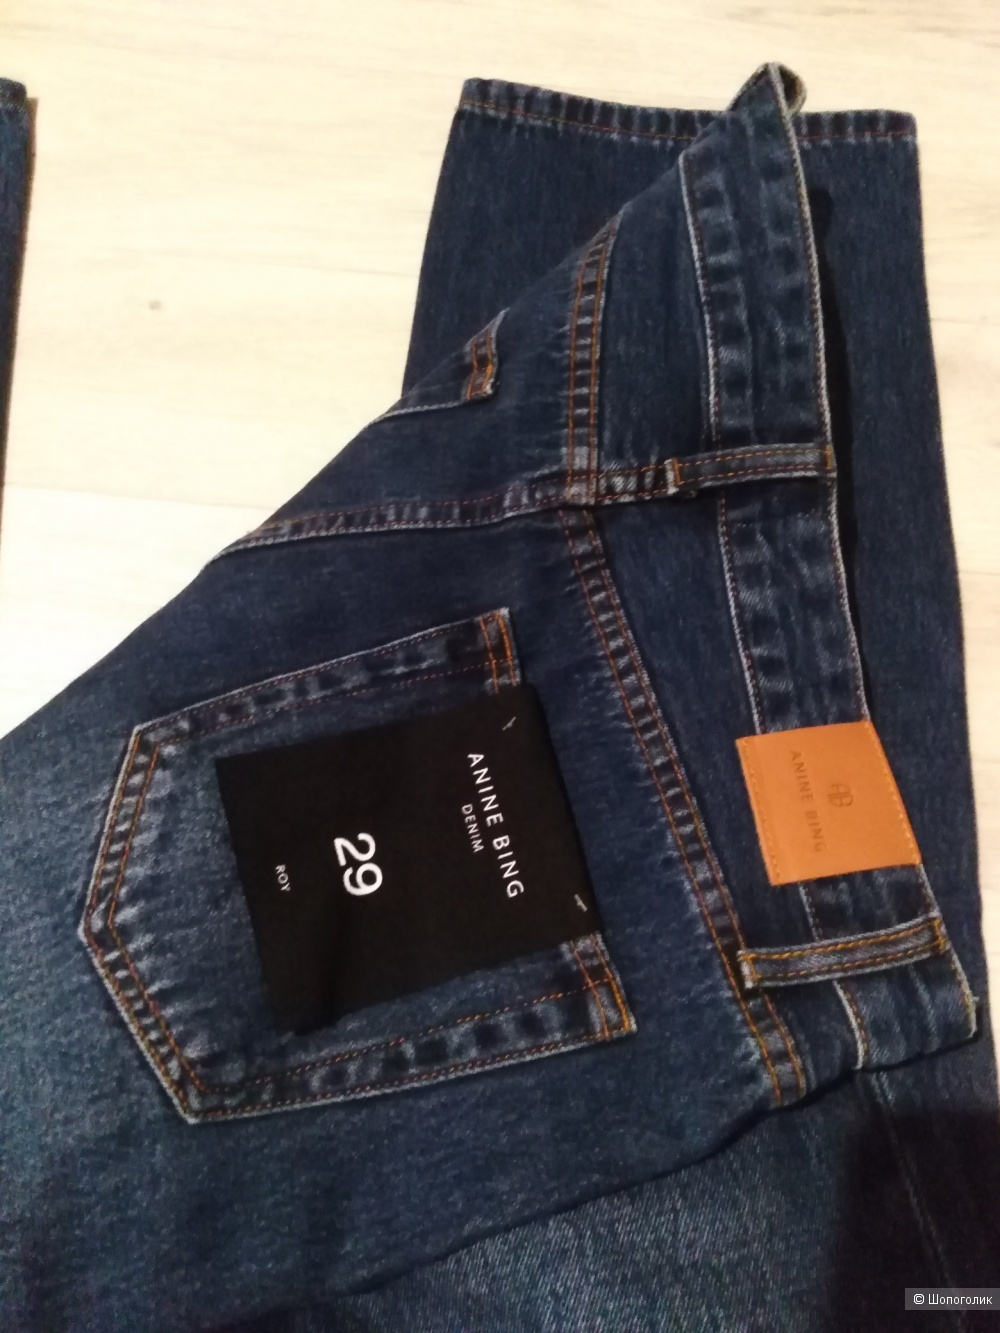 Anine Bing джинсы, 29 размер